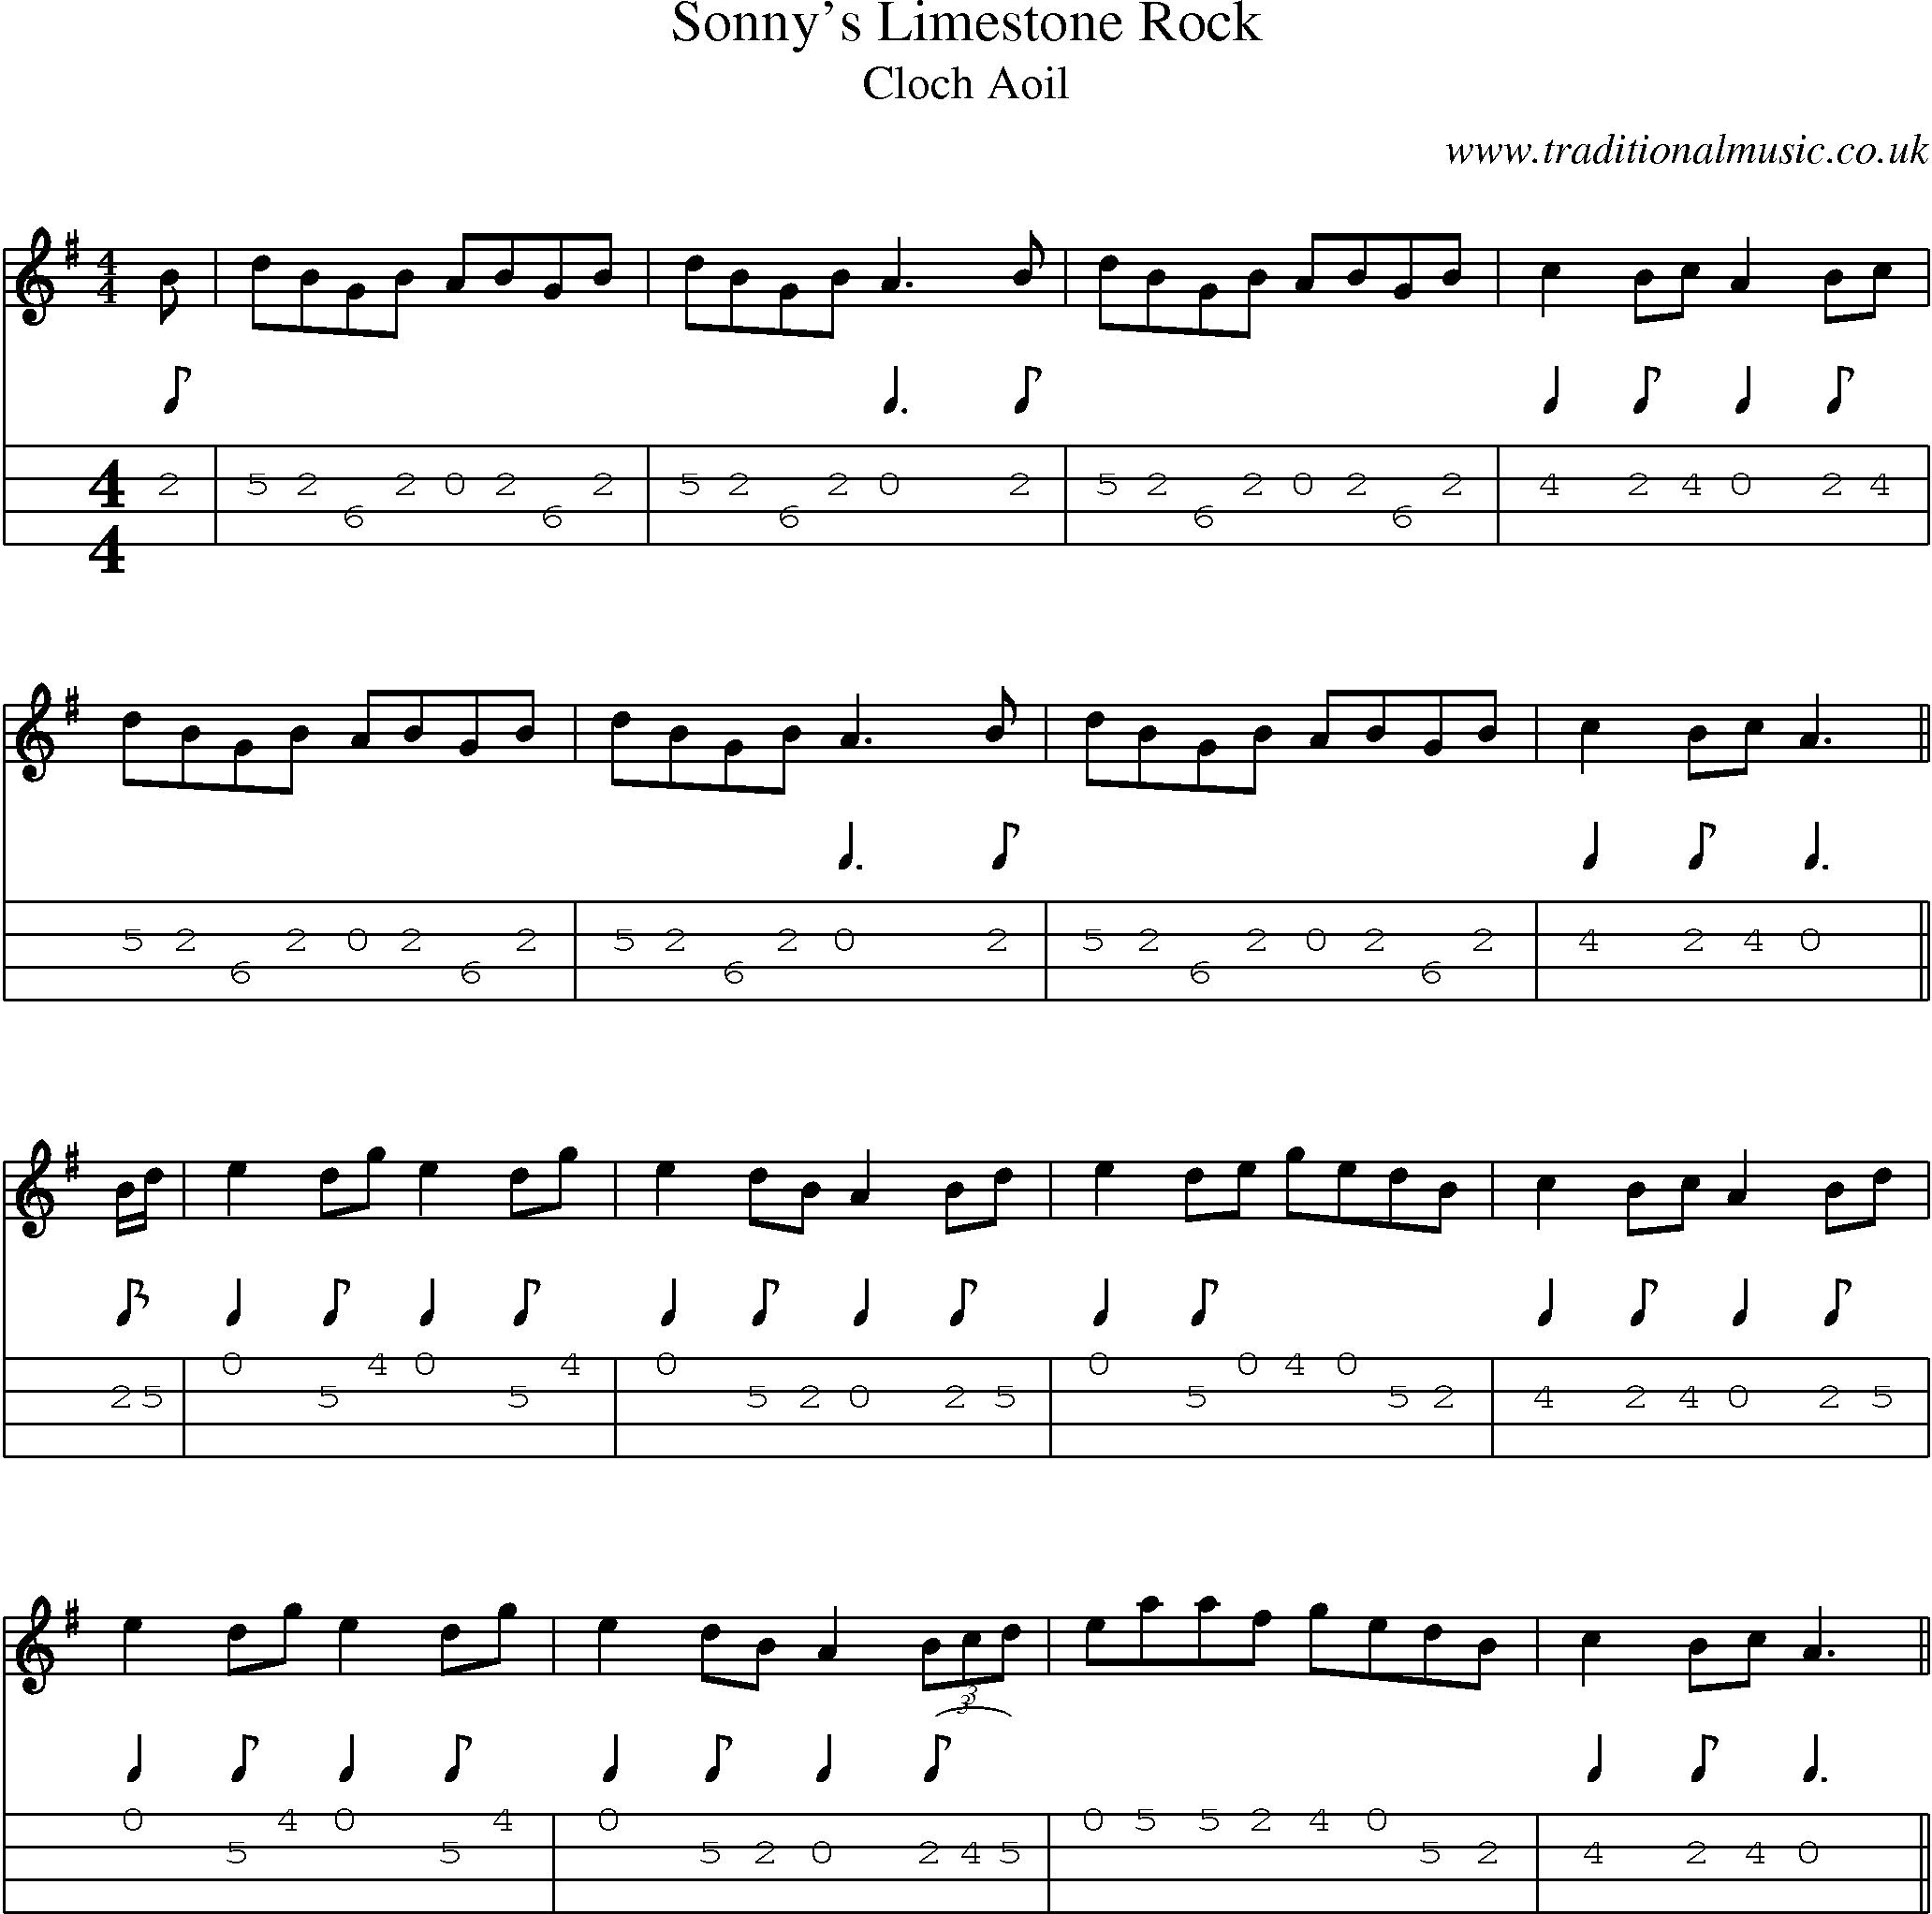 Music Score and Mandolin Tabs for Sonnys Limestone Rock